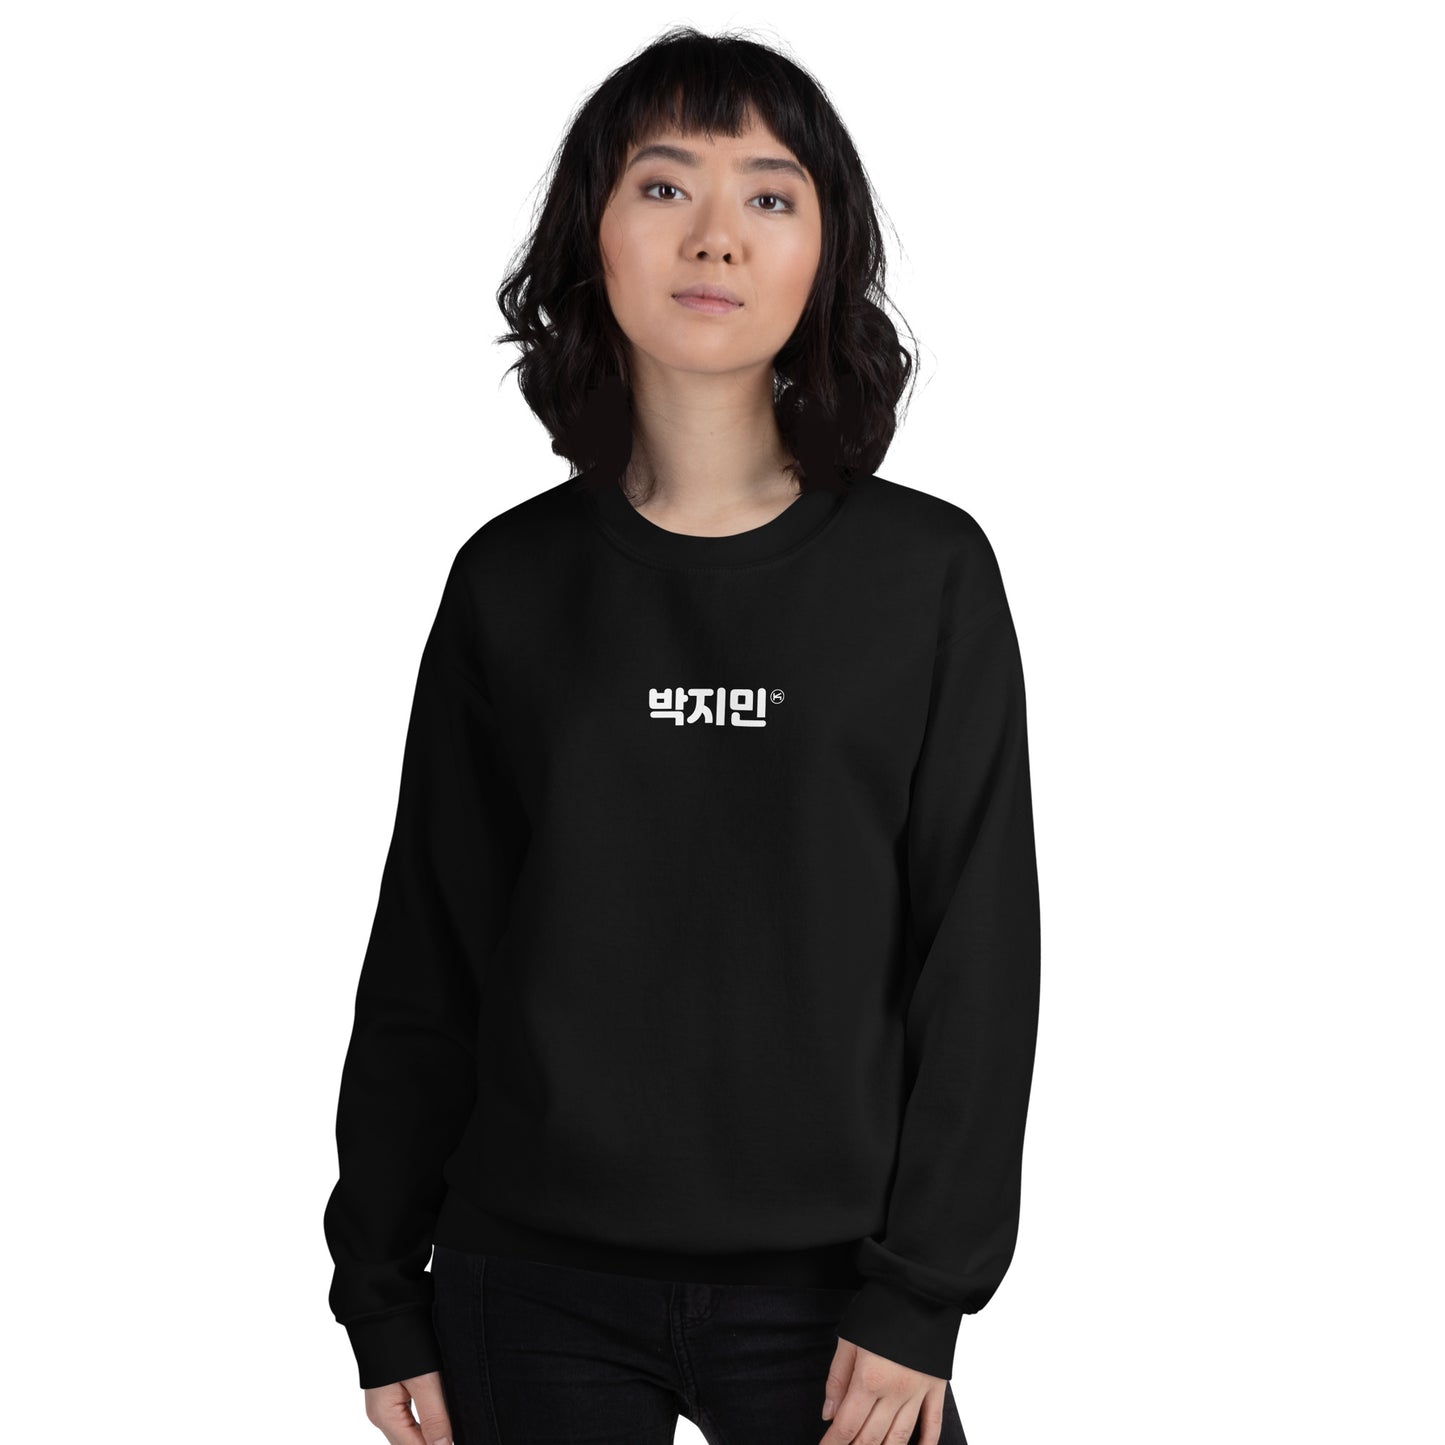 Jimin, Park Ji-min in Korean Hangul Kpop BTS Merch Unisex Sweatshirt